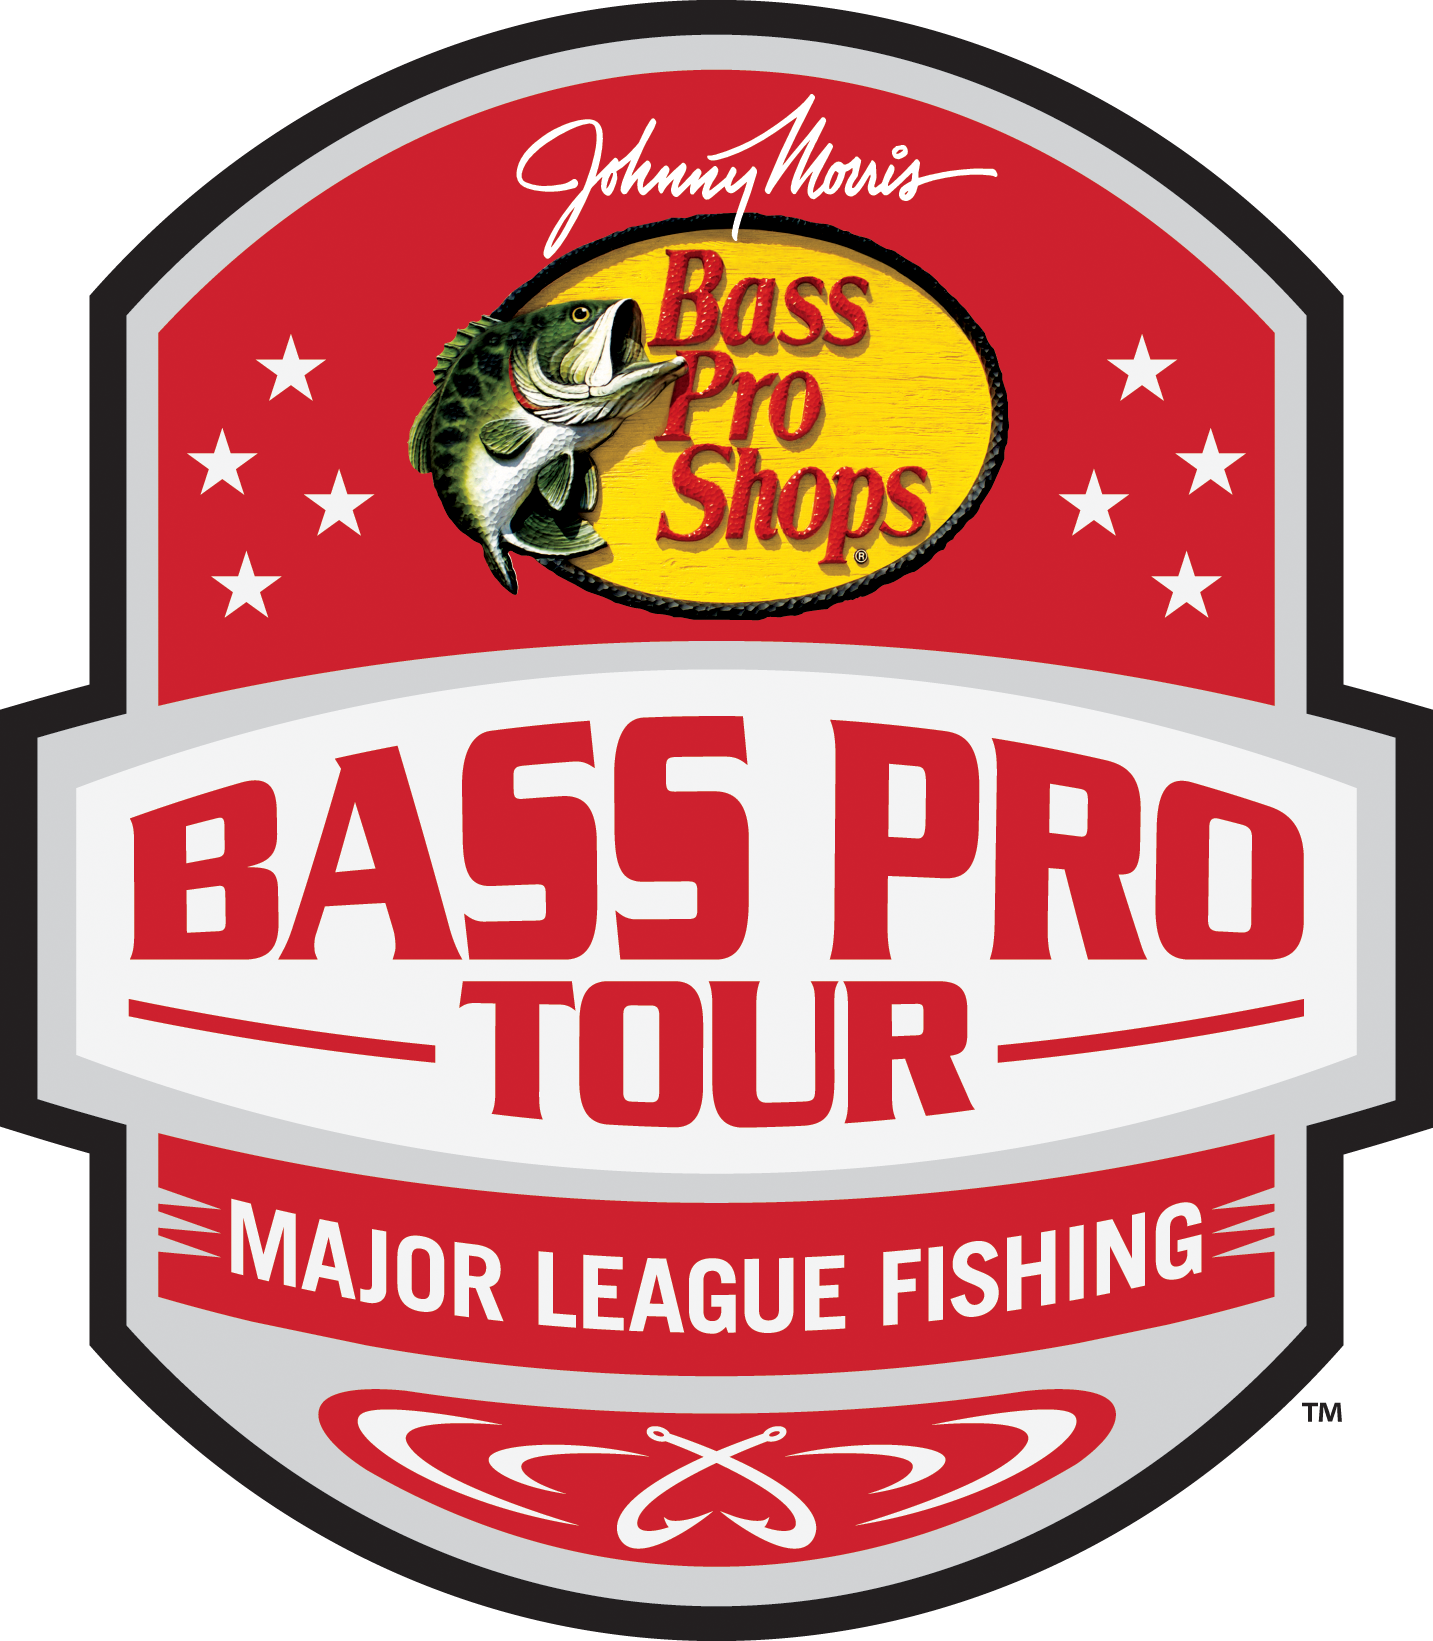 Bass Pro Tour - Major League Fishing